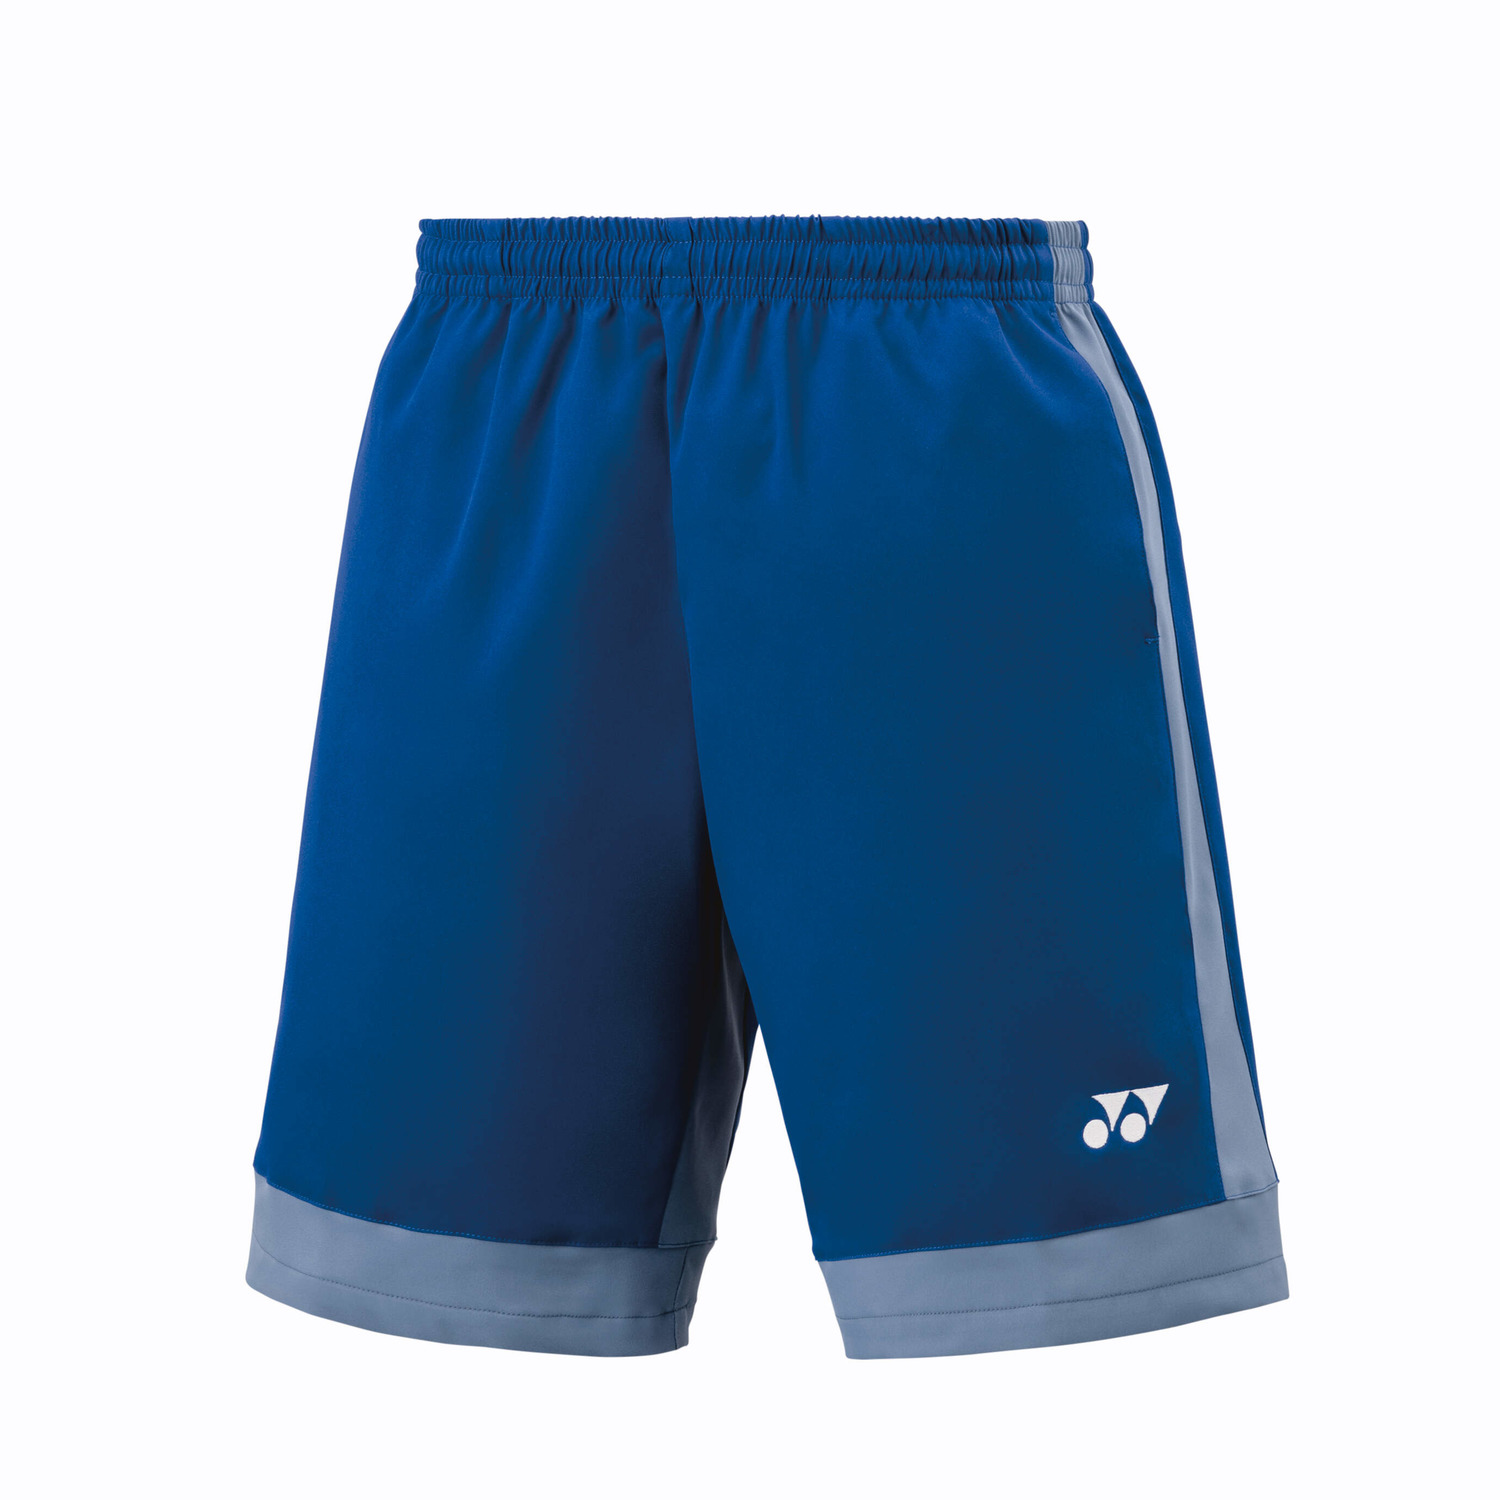 Yonex Badminton/ Sports Shorts 15144 Midnight Navy (Made in Japan) MEN'S